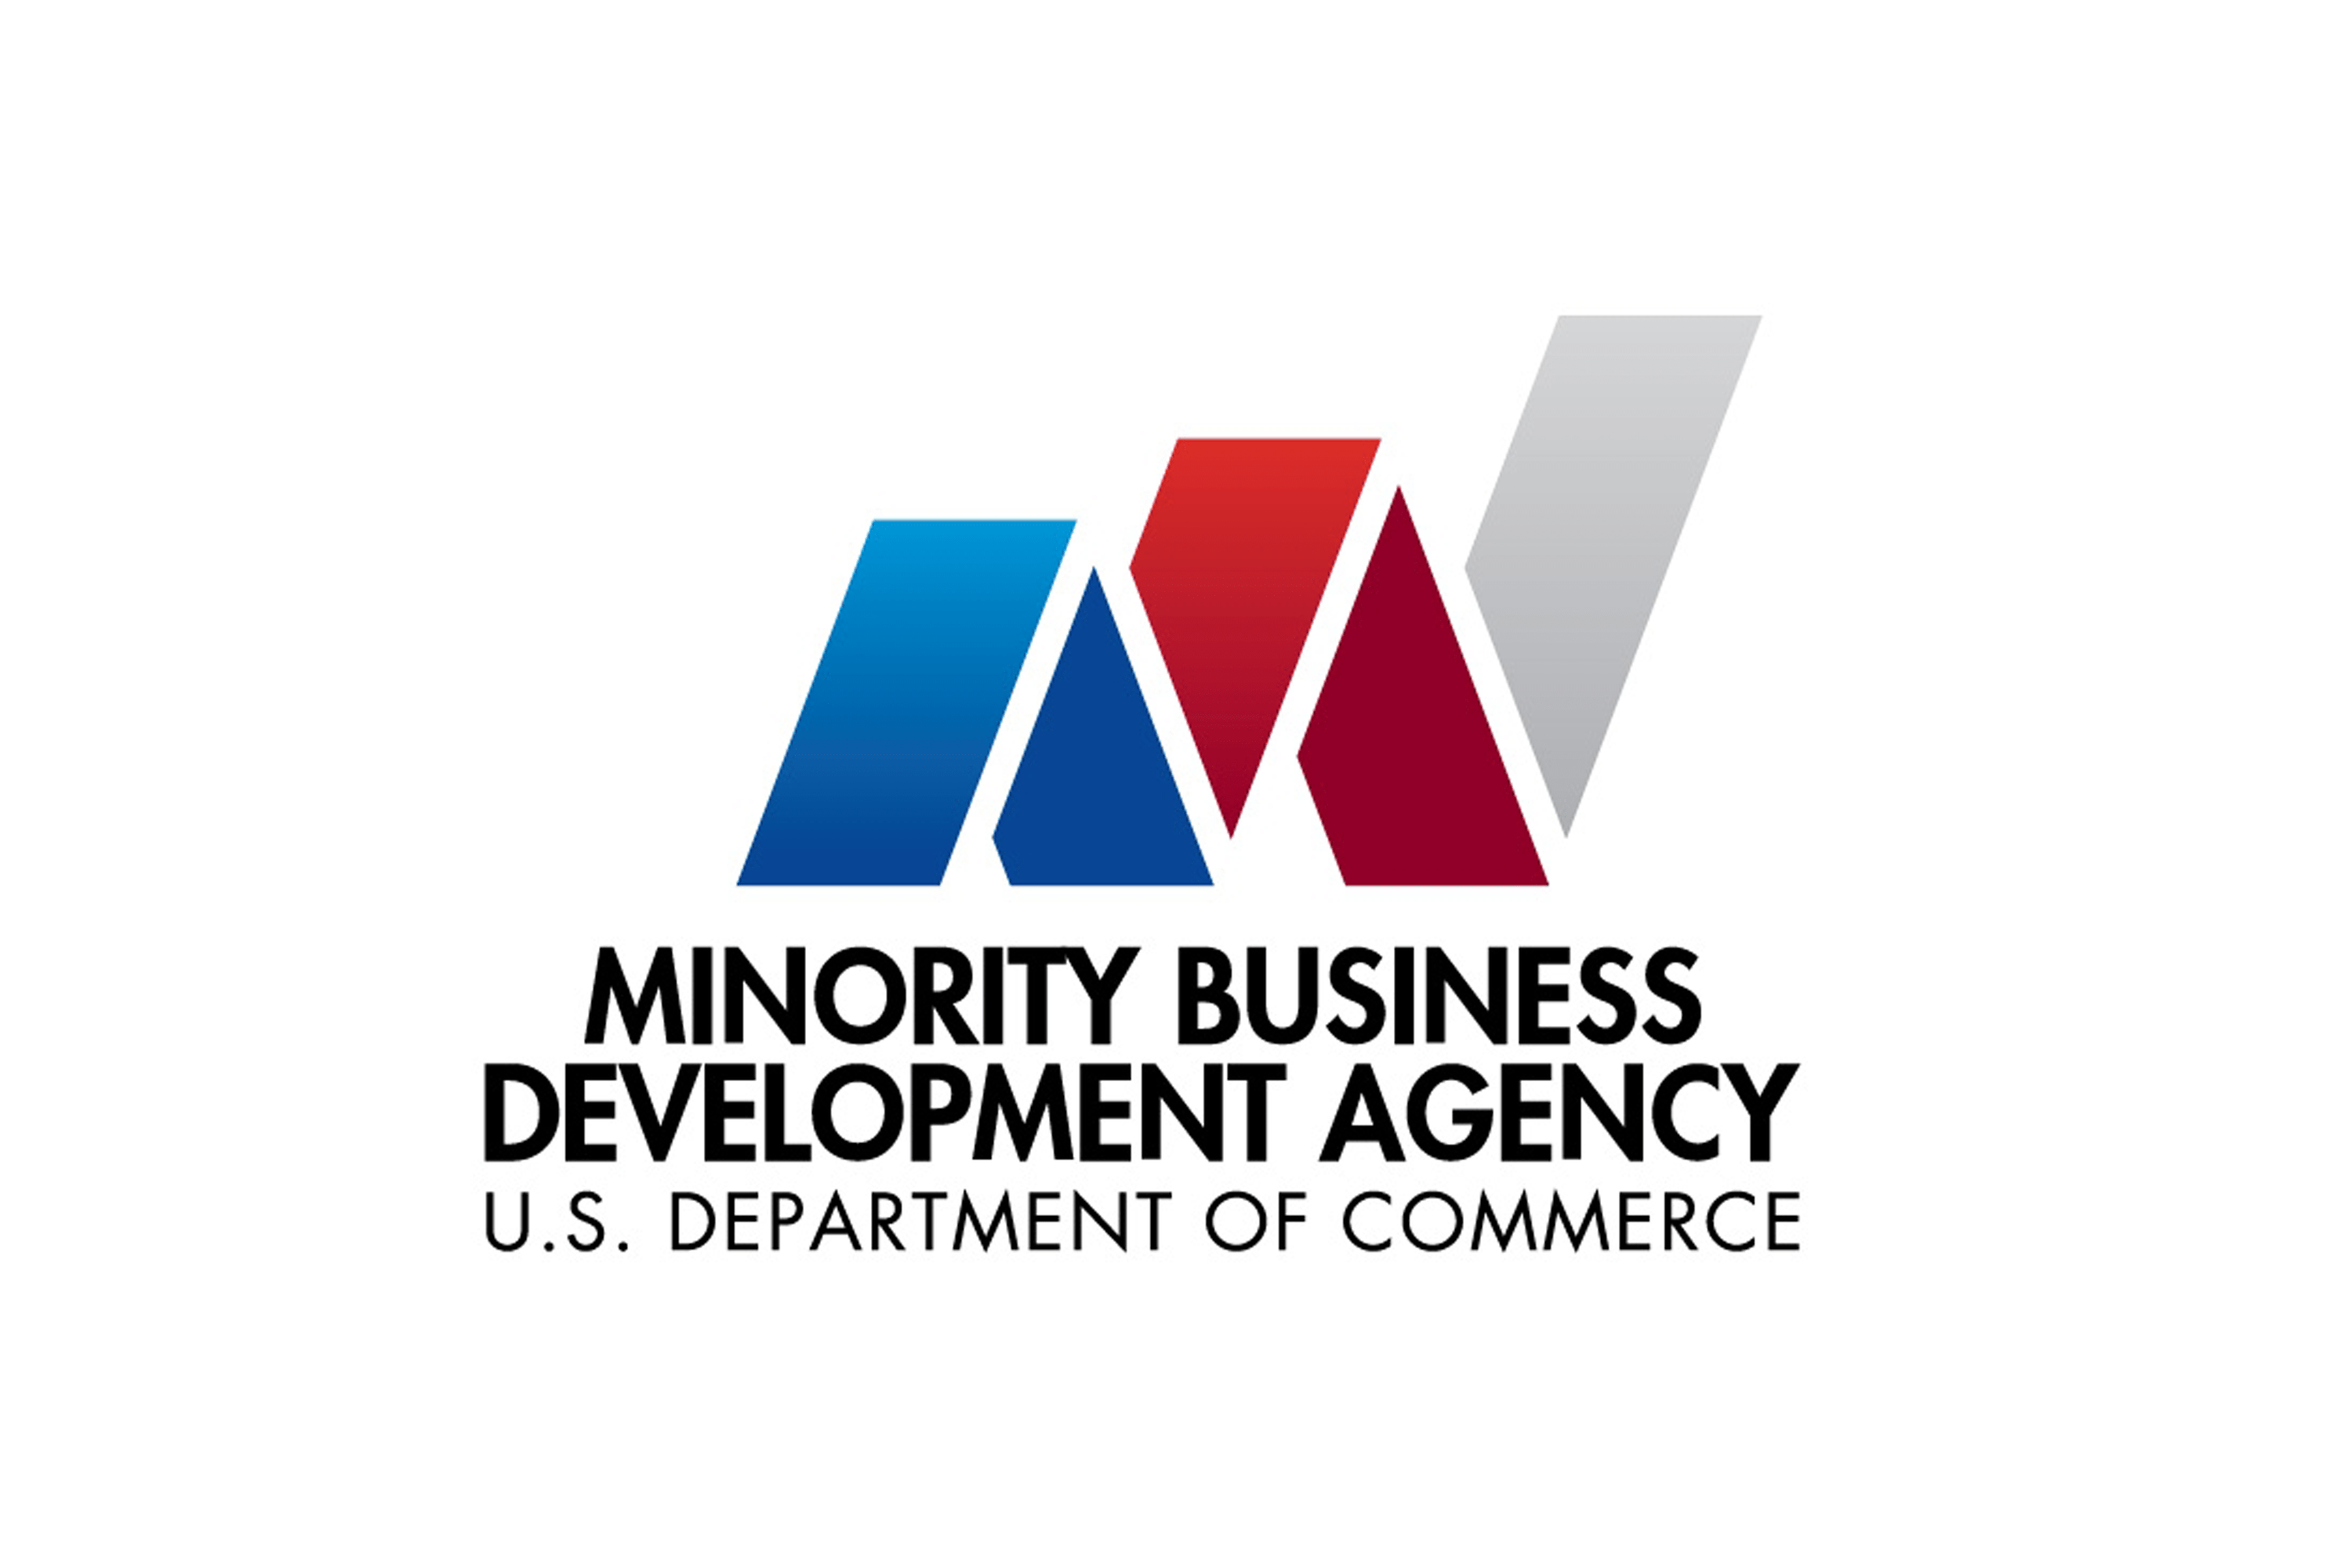 Minority_Business_Development_Agency_DreamSpring